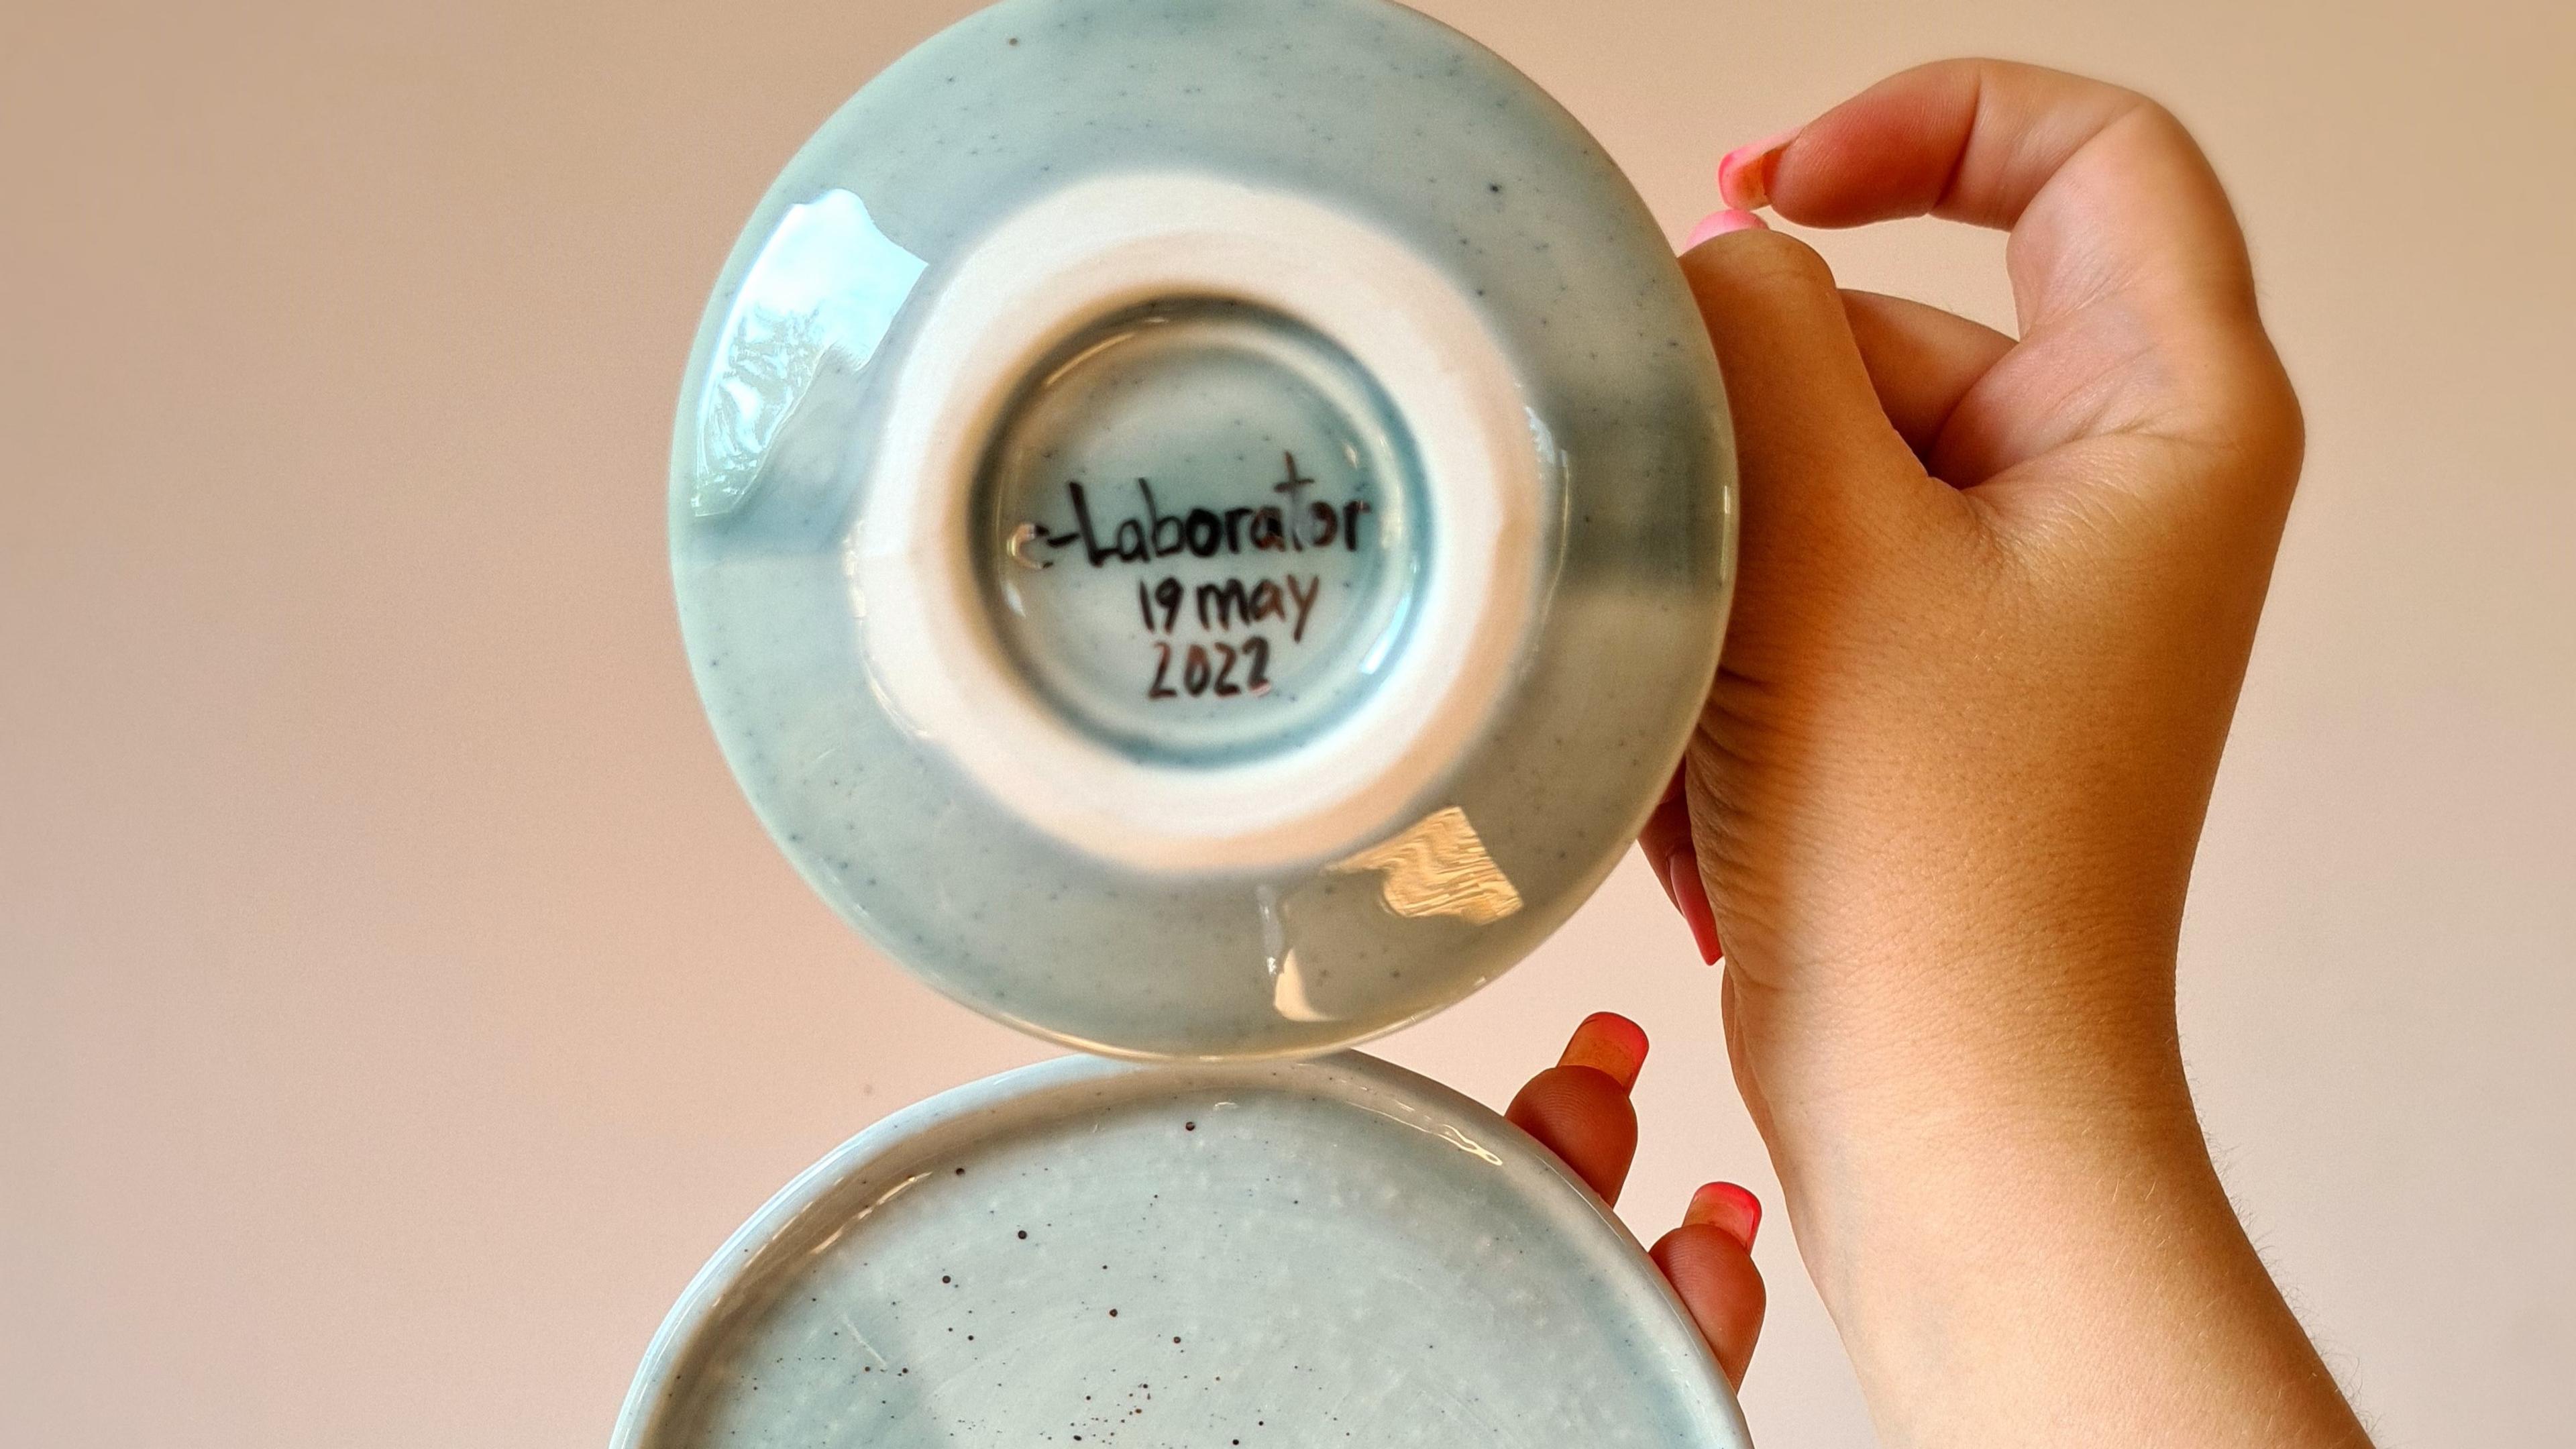 A handmade mug and plate with the text e-laborator on it.